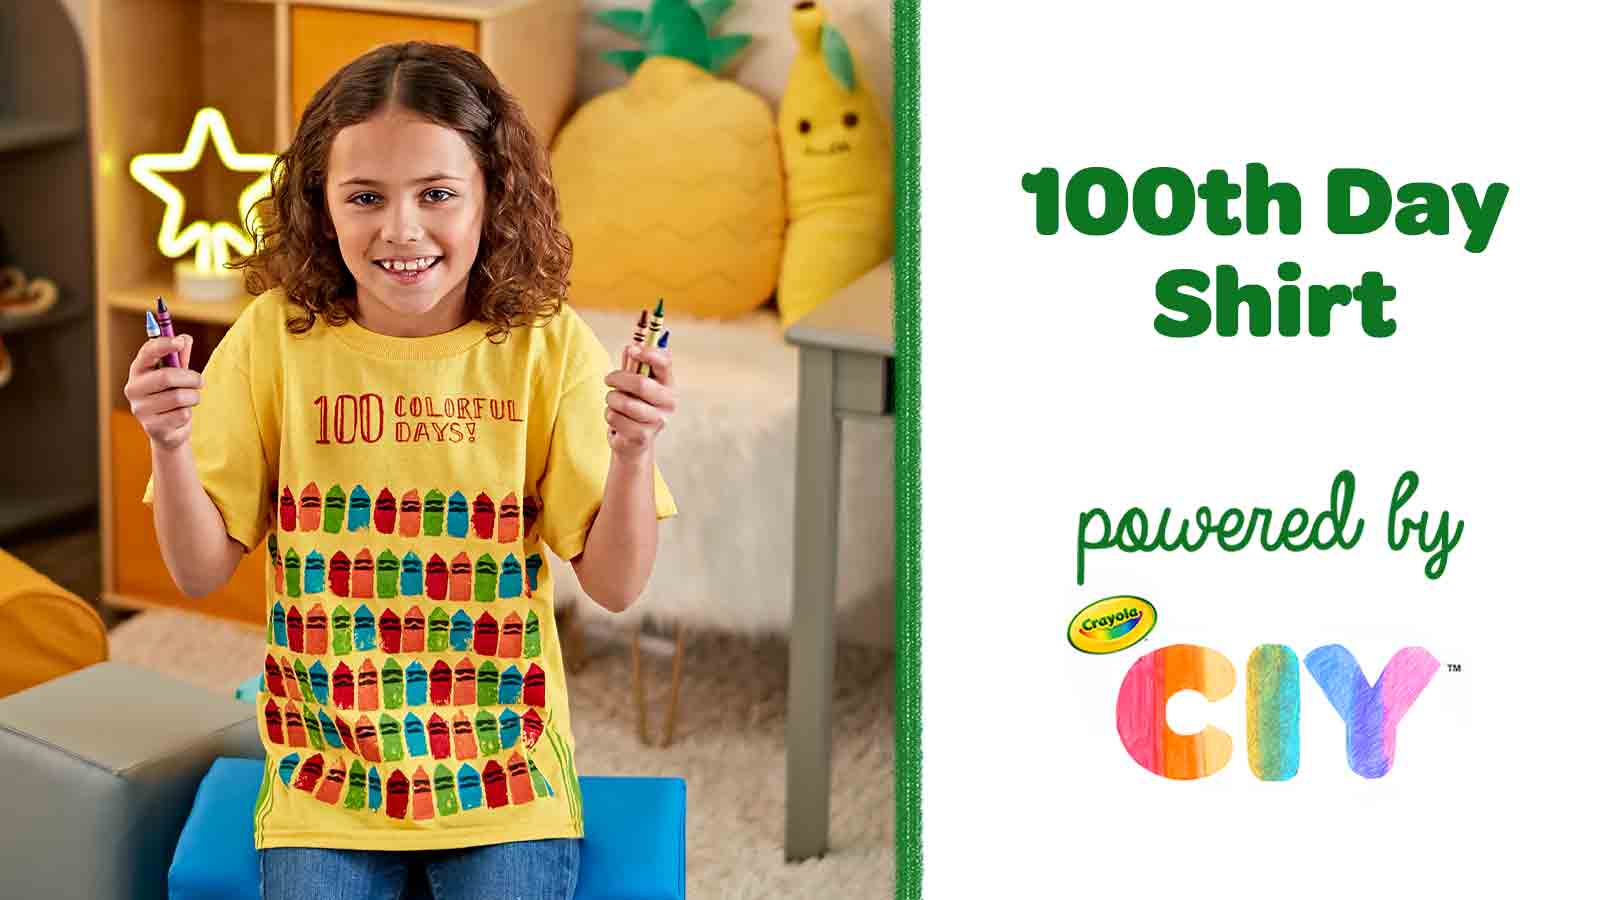 100 days of school shirt for boys